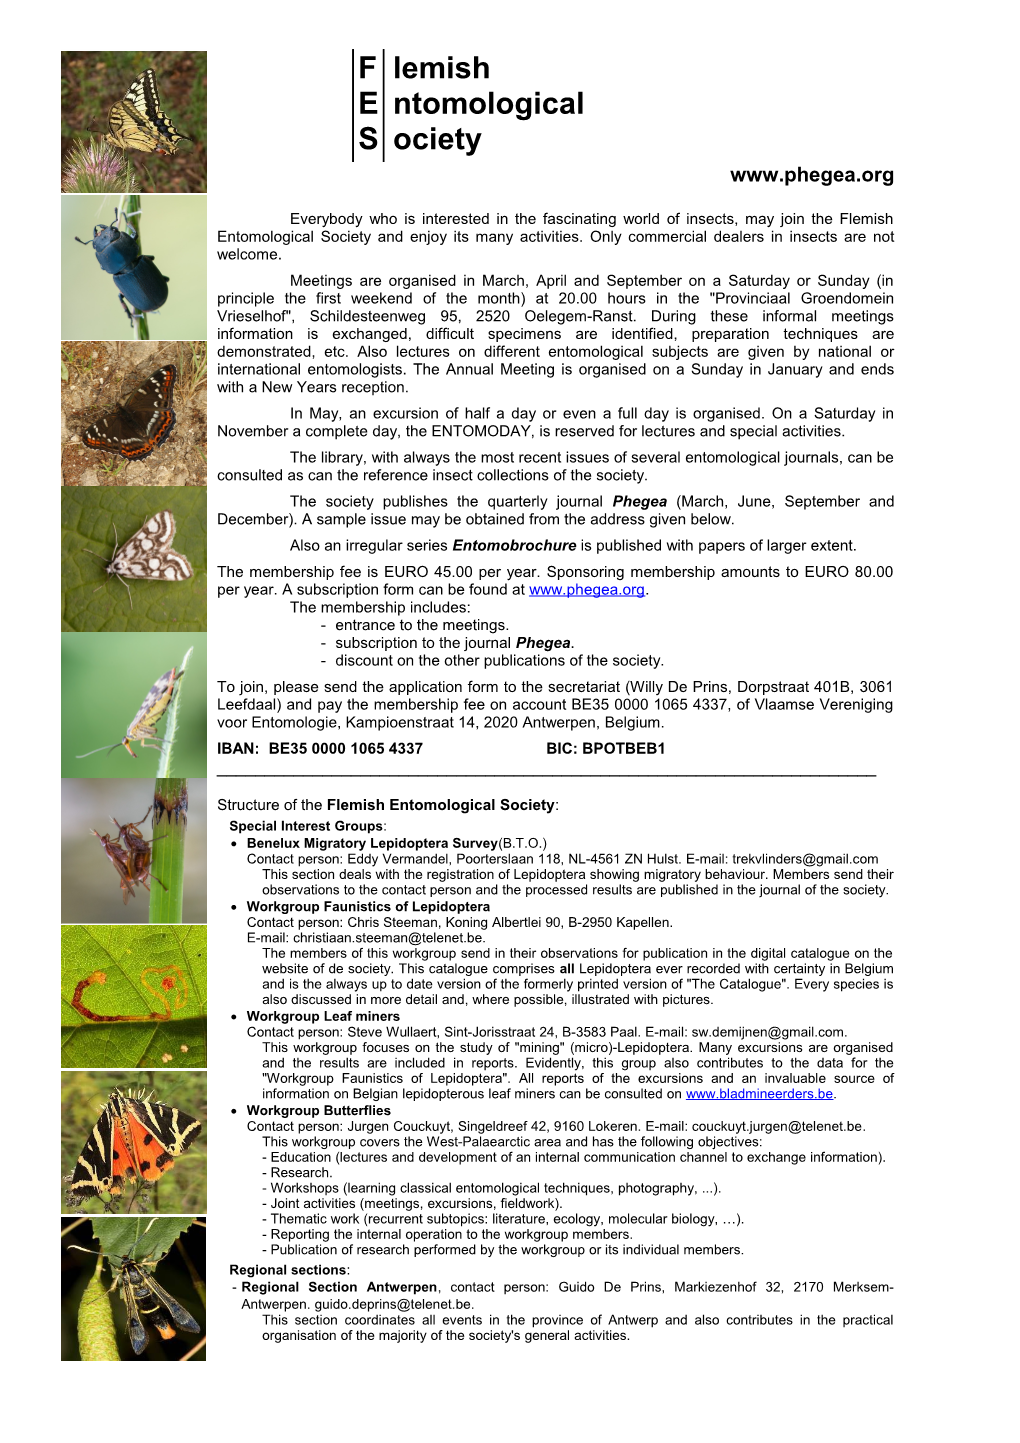 Flemish Entomological Societyapplication Form for Membership